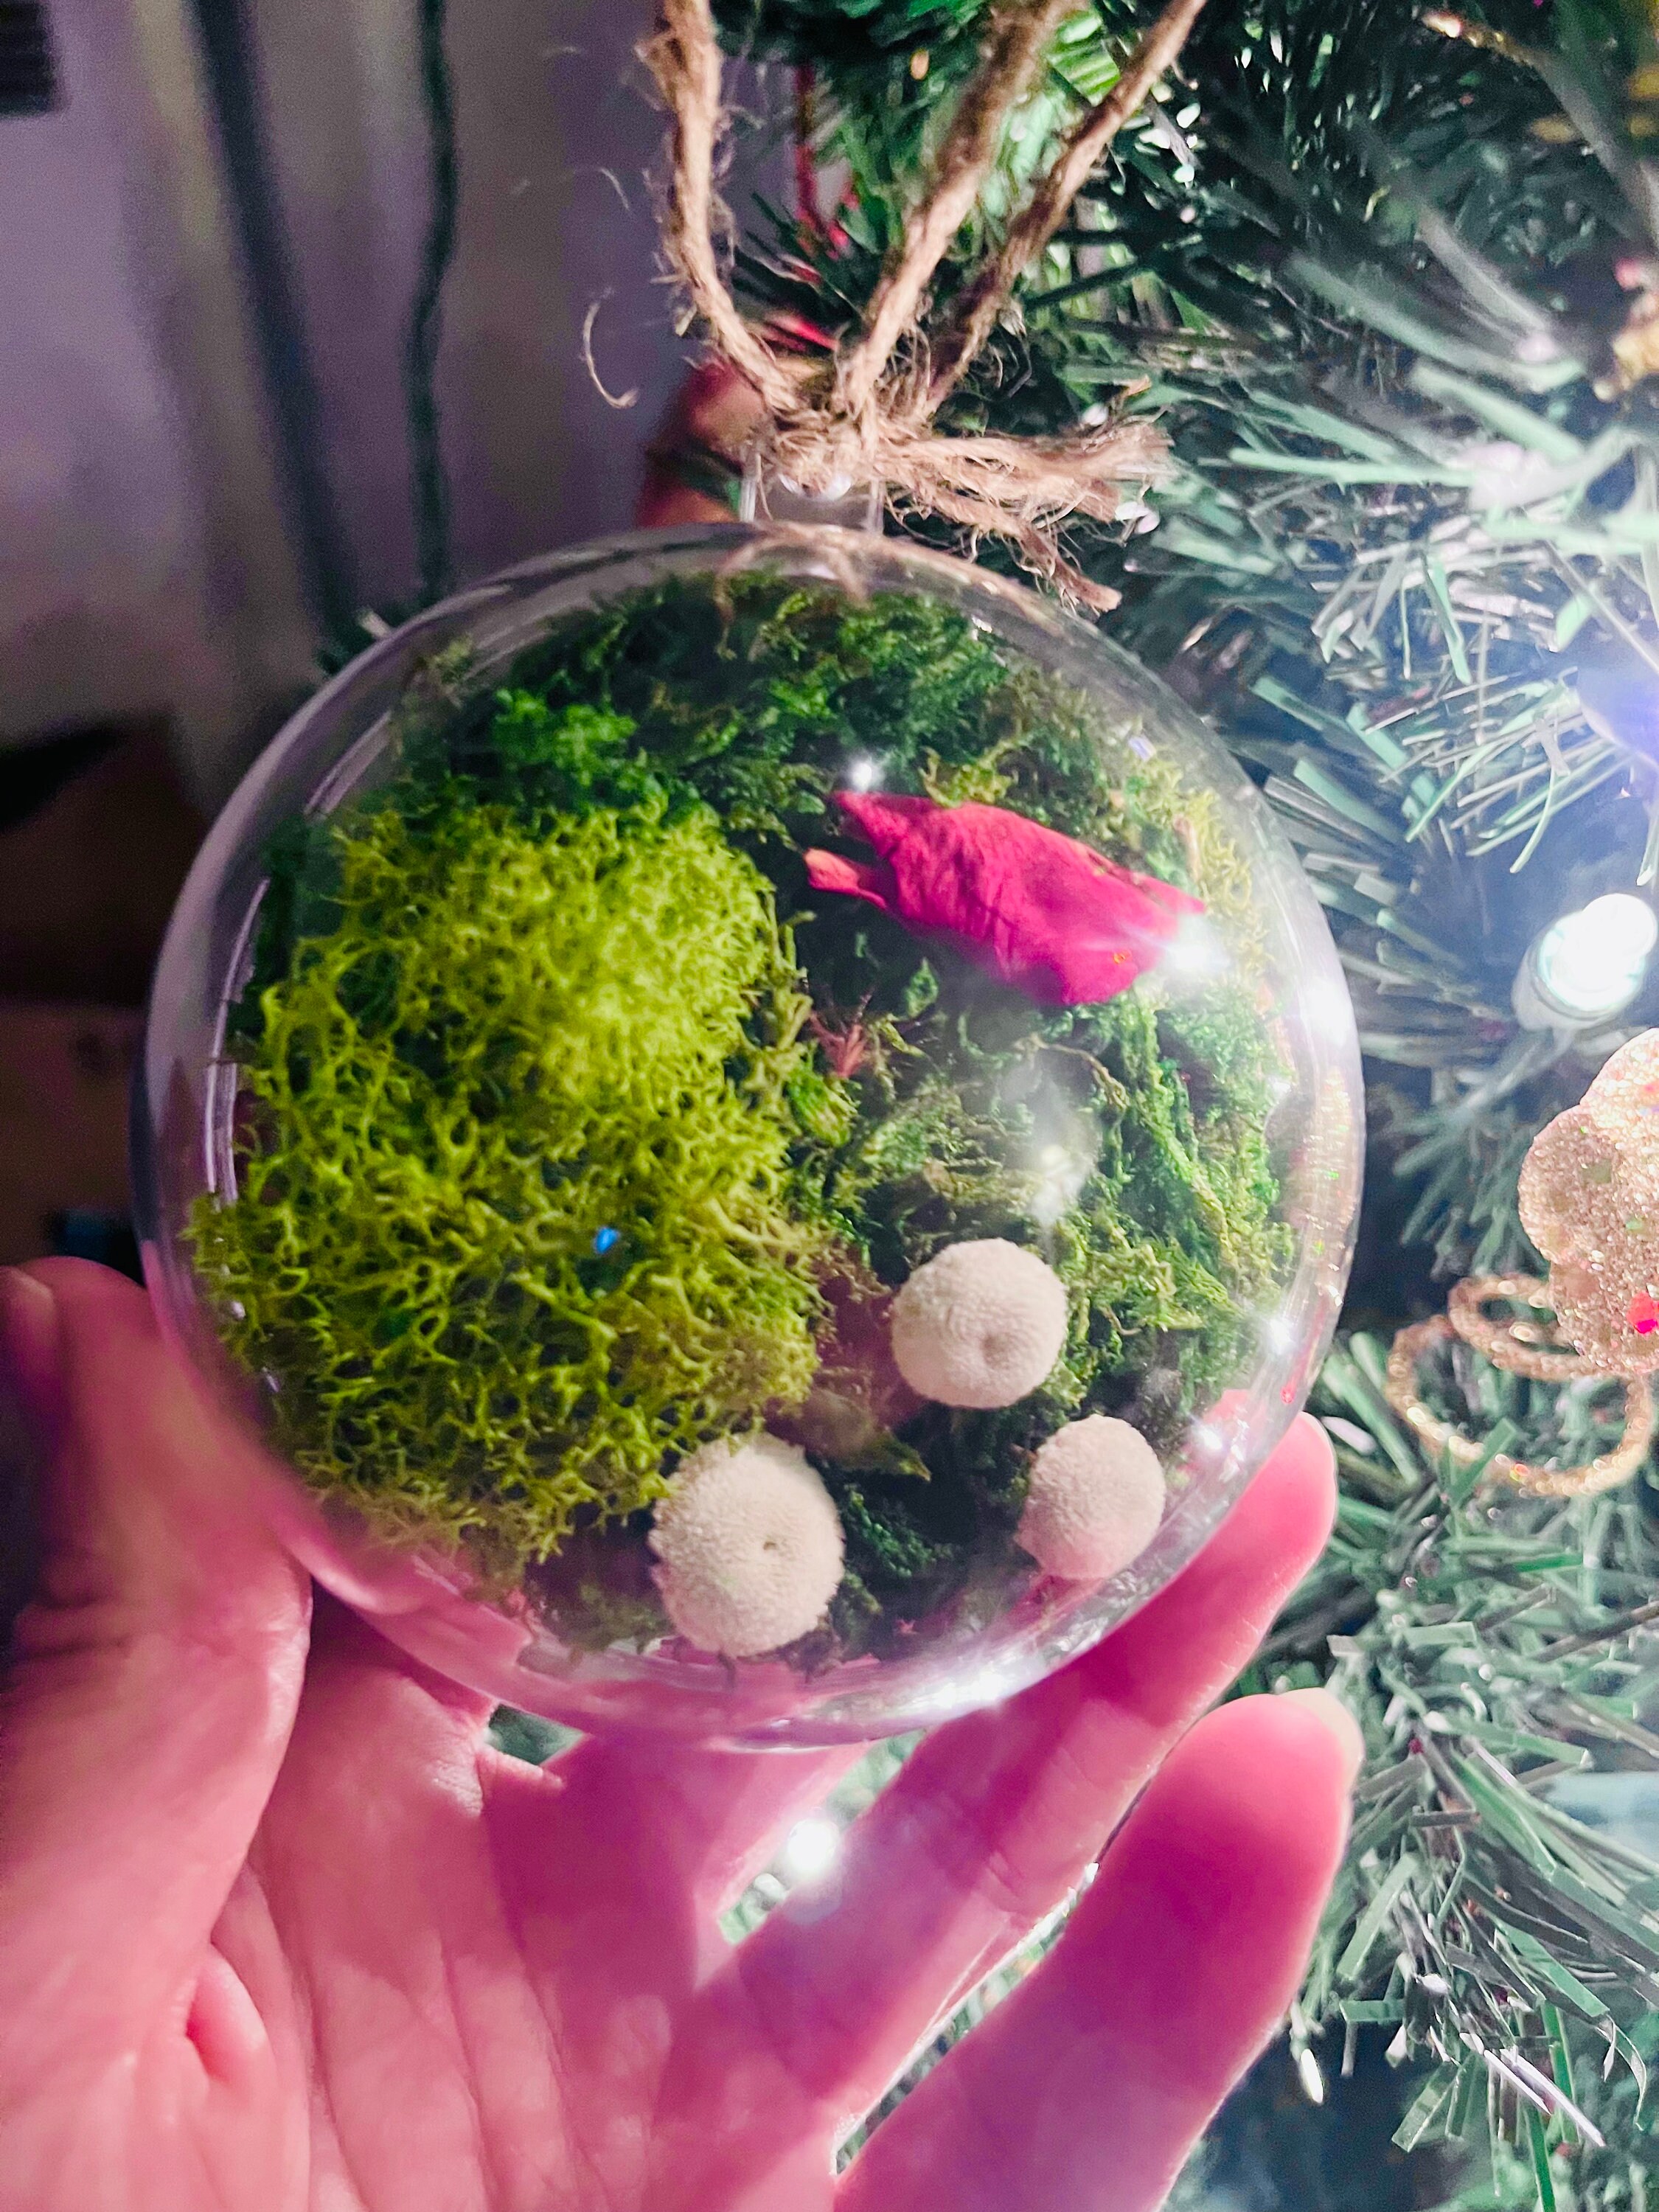 Christmas velvet ornaments - Beige, Moss green, Brown - 3.94 inch - 11  units set